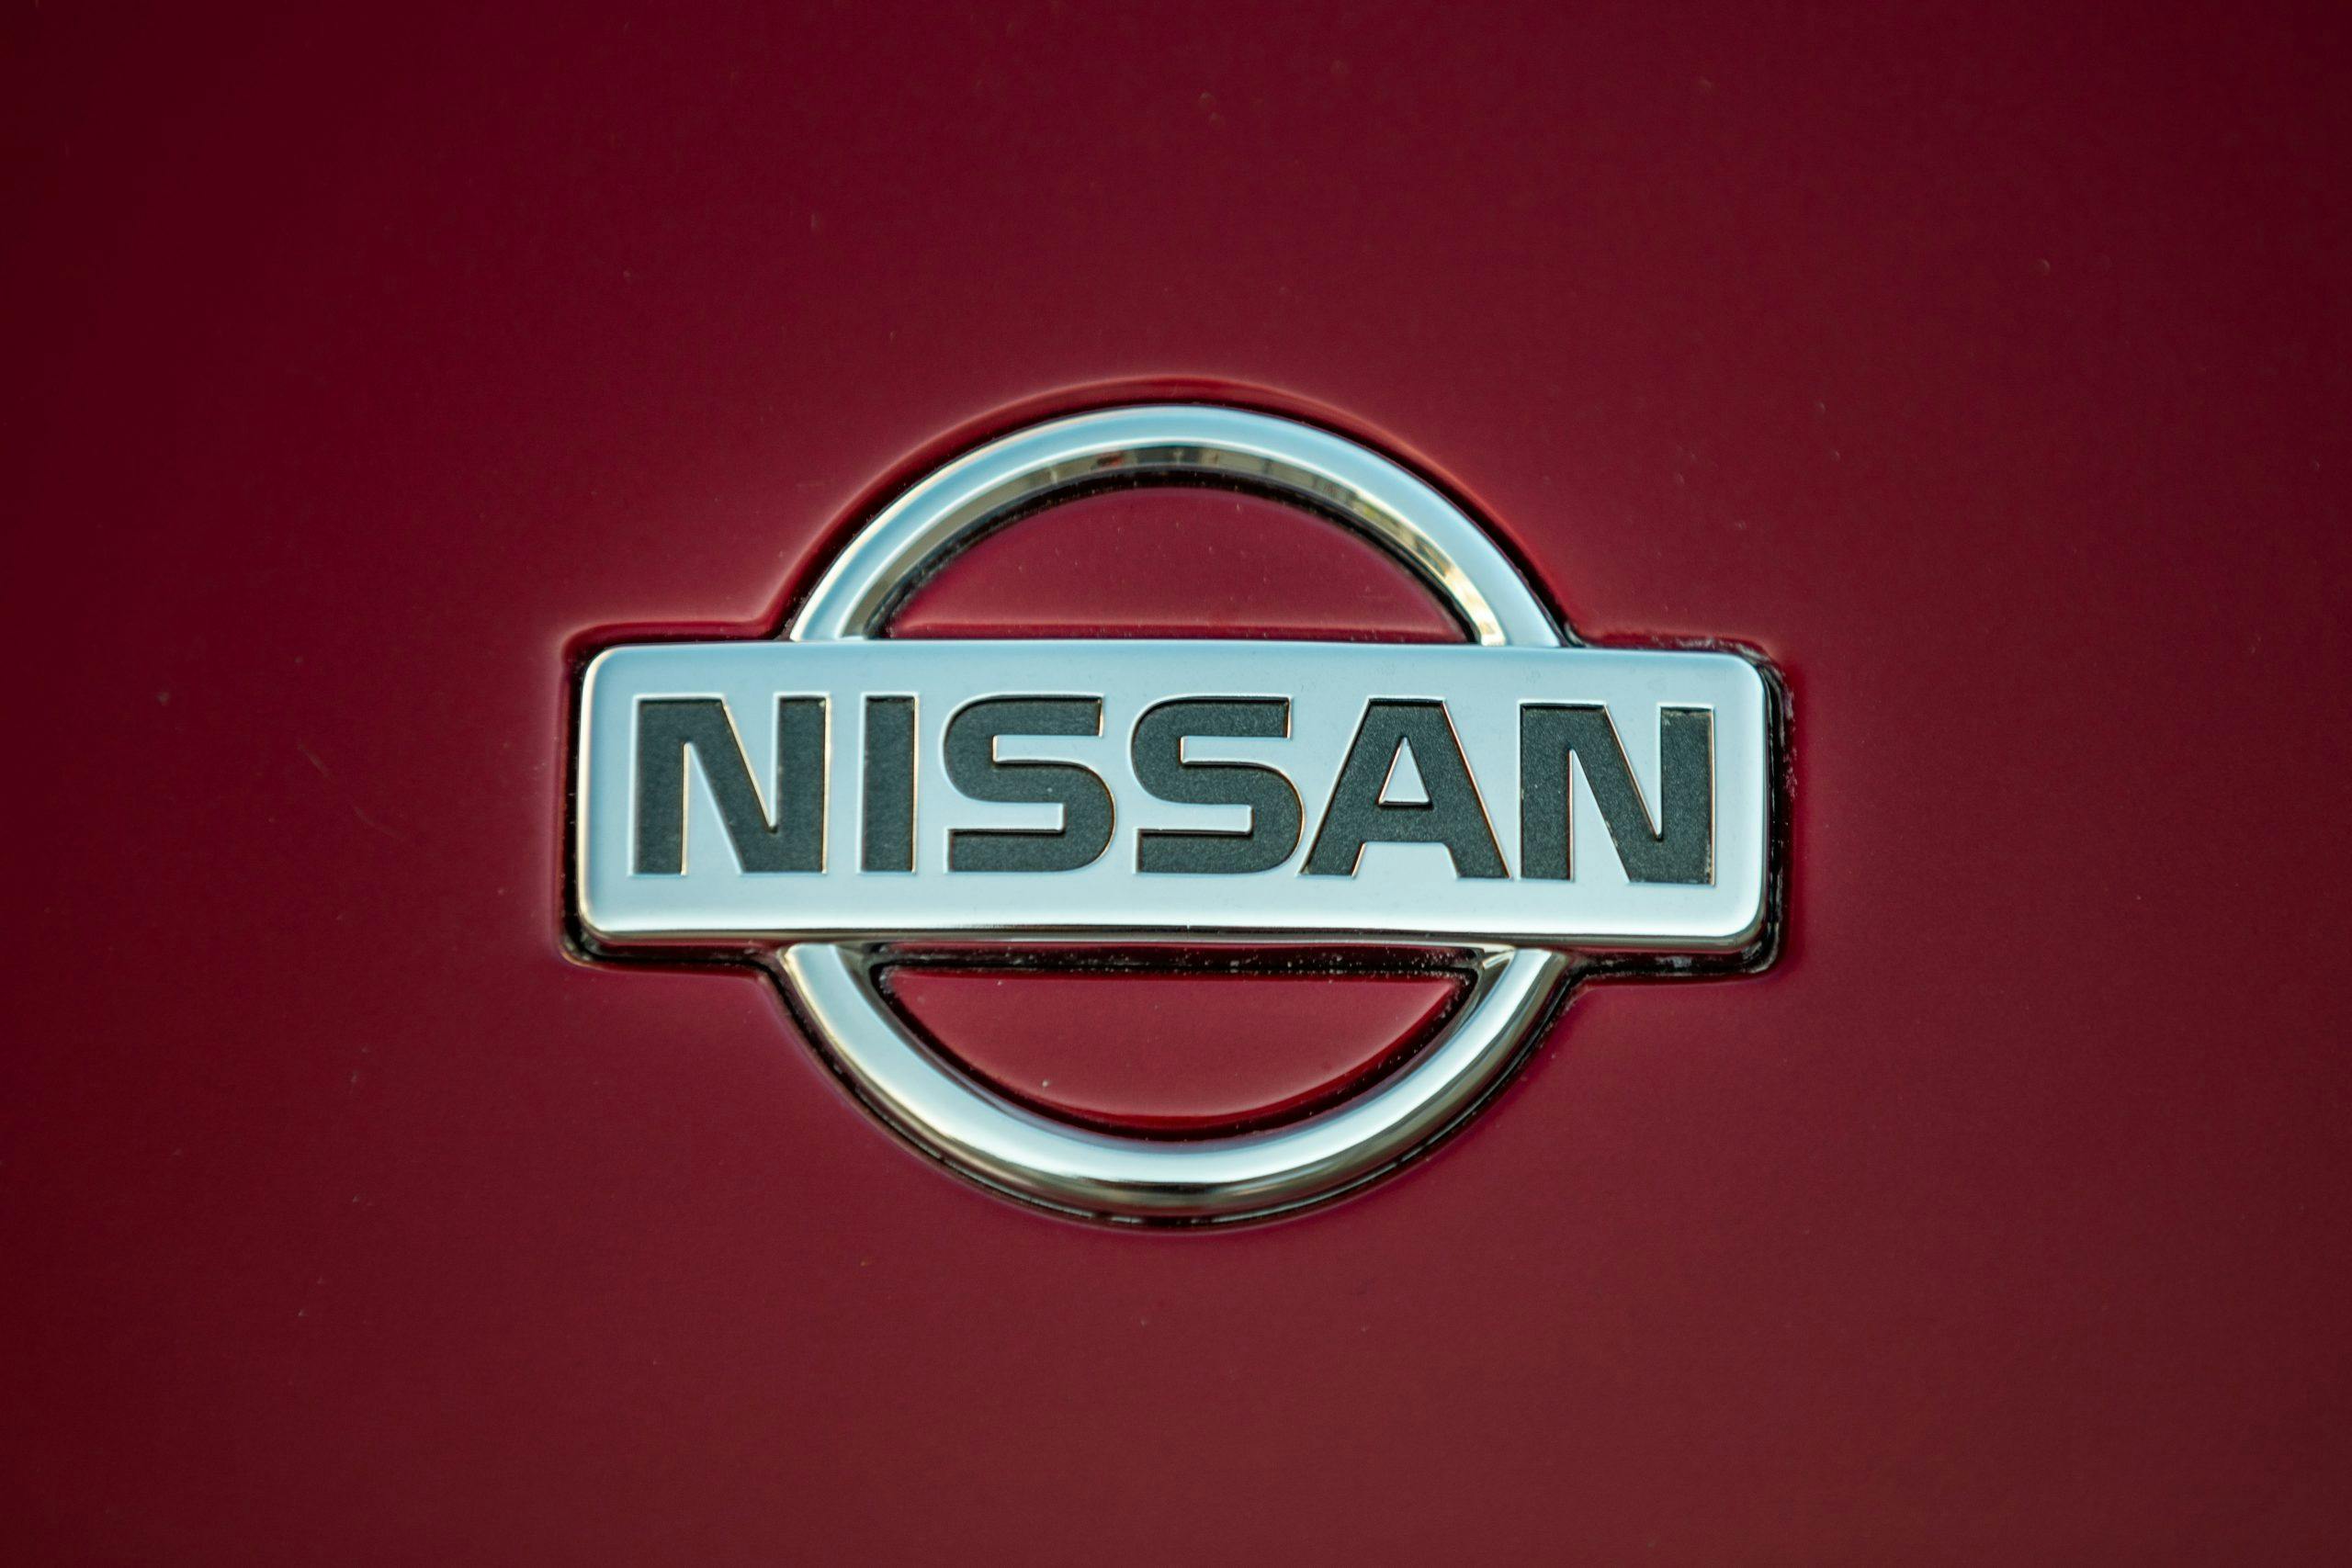 Nissan 300ZX badging